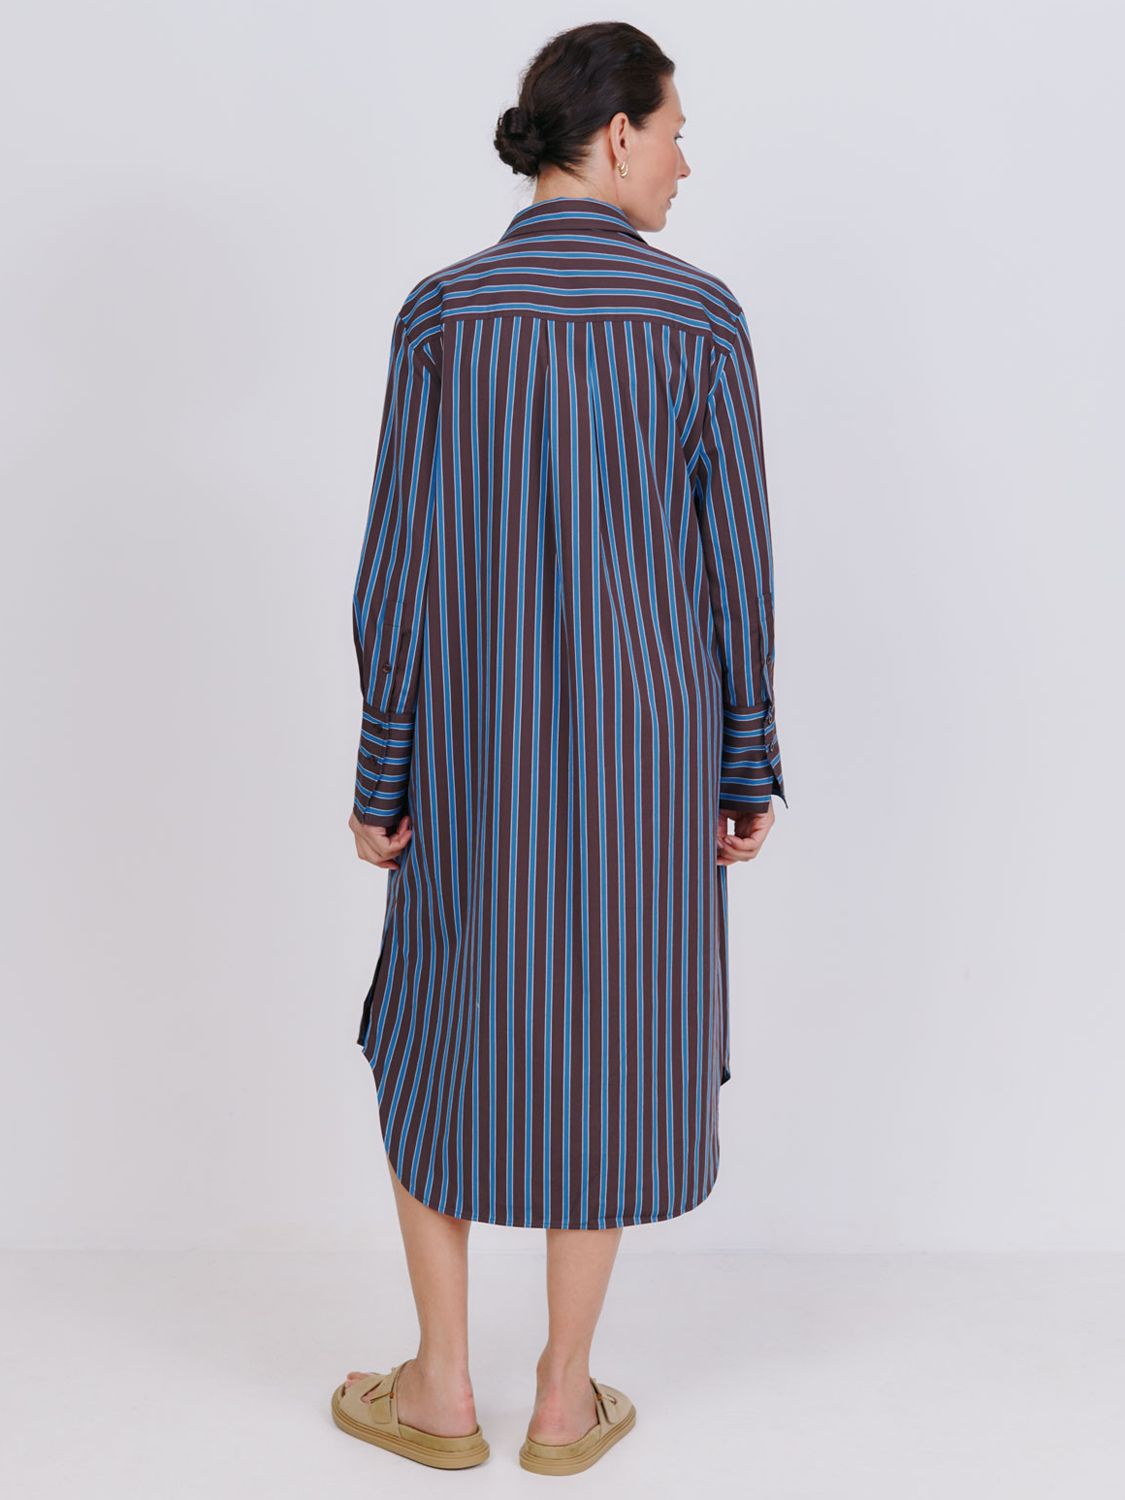 Vivere By Savannah Miller Sid Stripe Midi Shirt Dress, Blue/Brown, 16